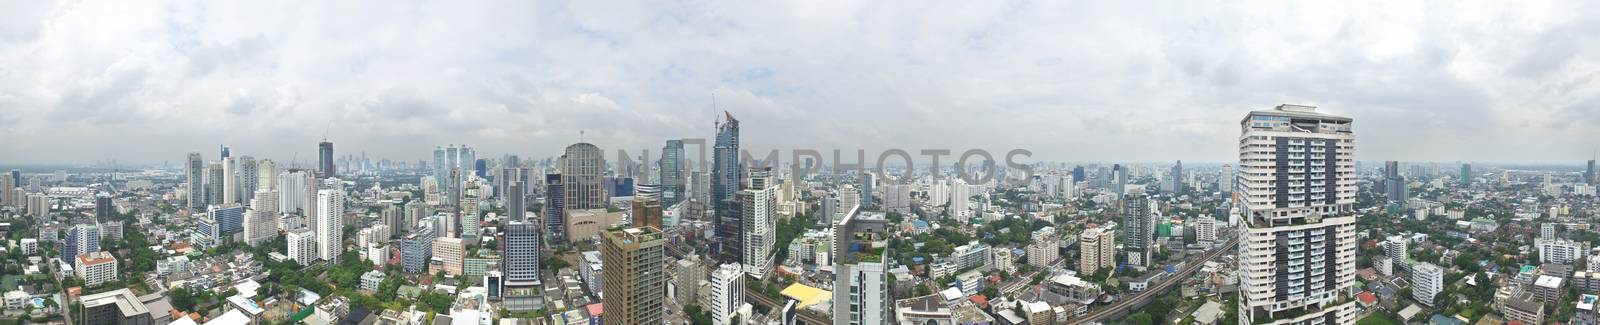 panorama of sukhumvit area in bangkok city by antpkr